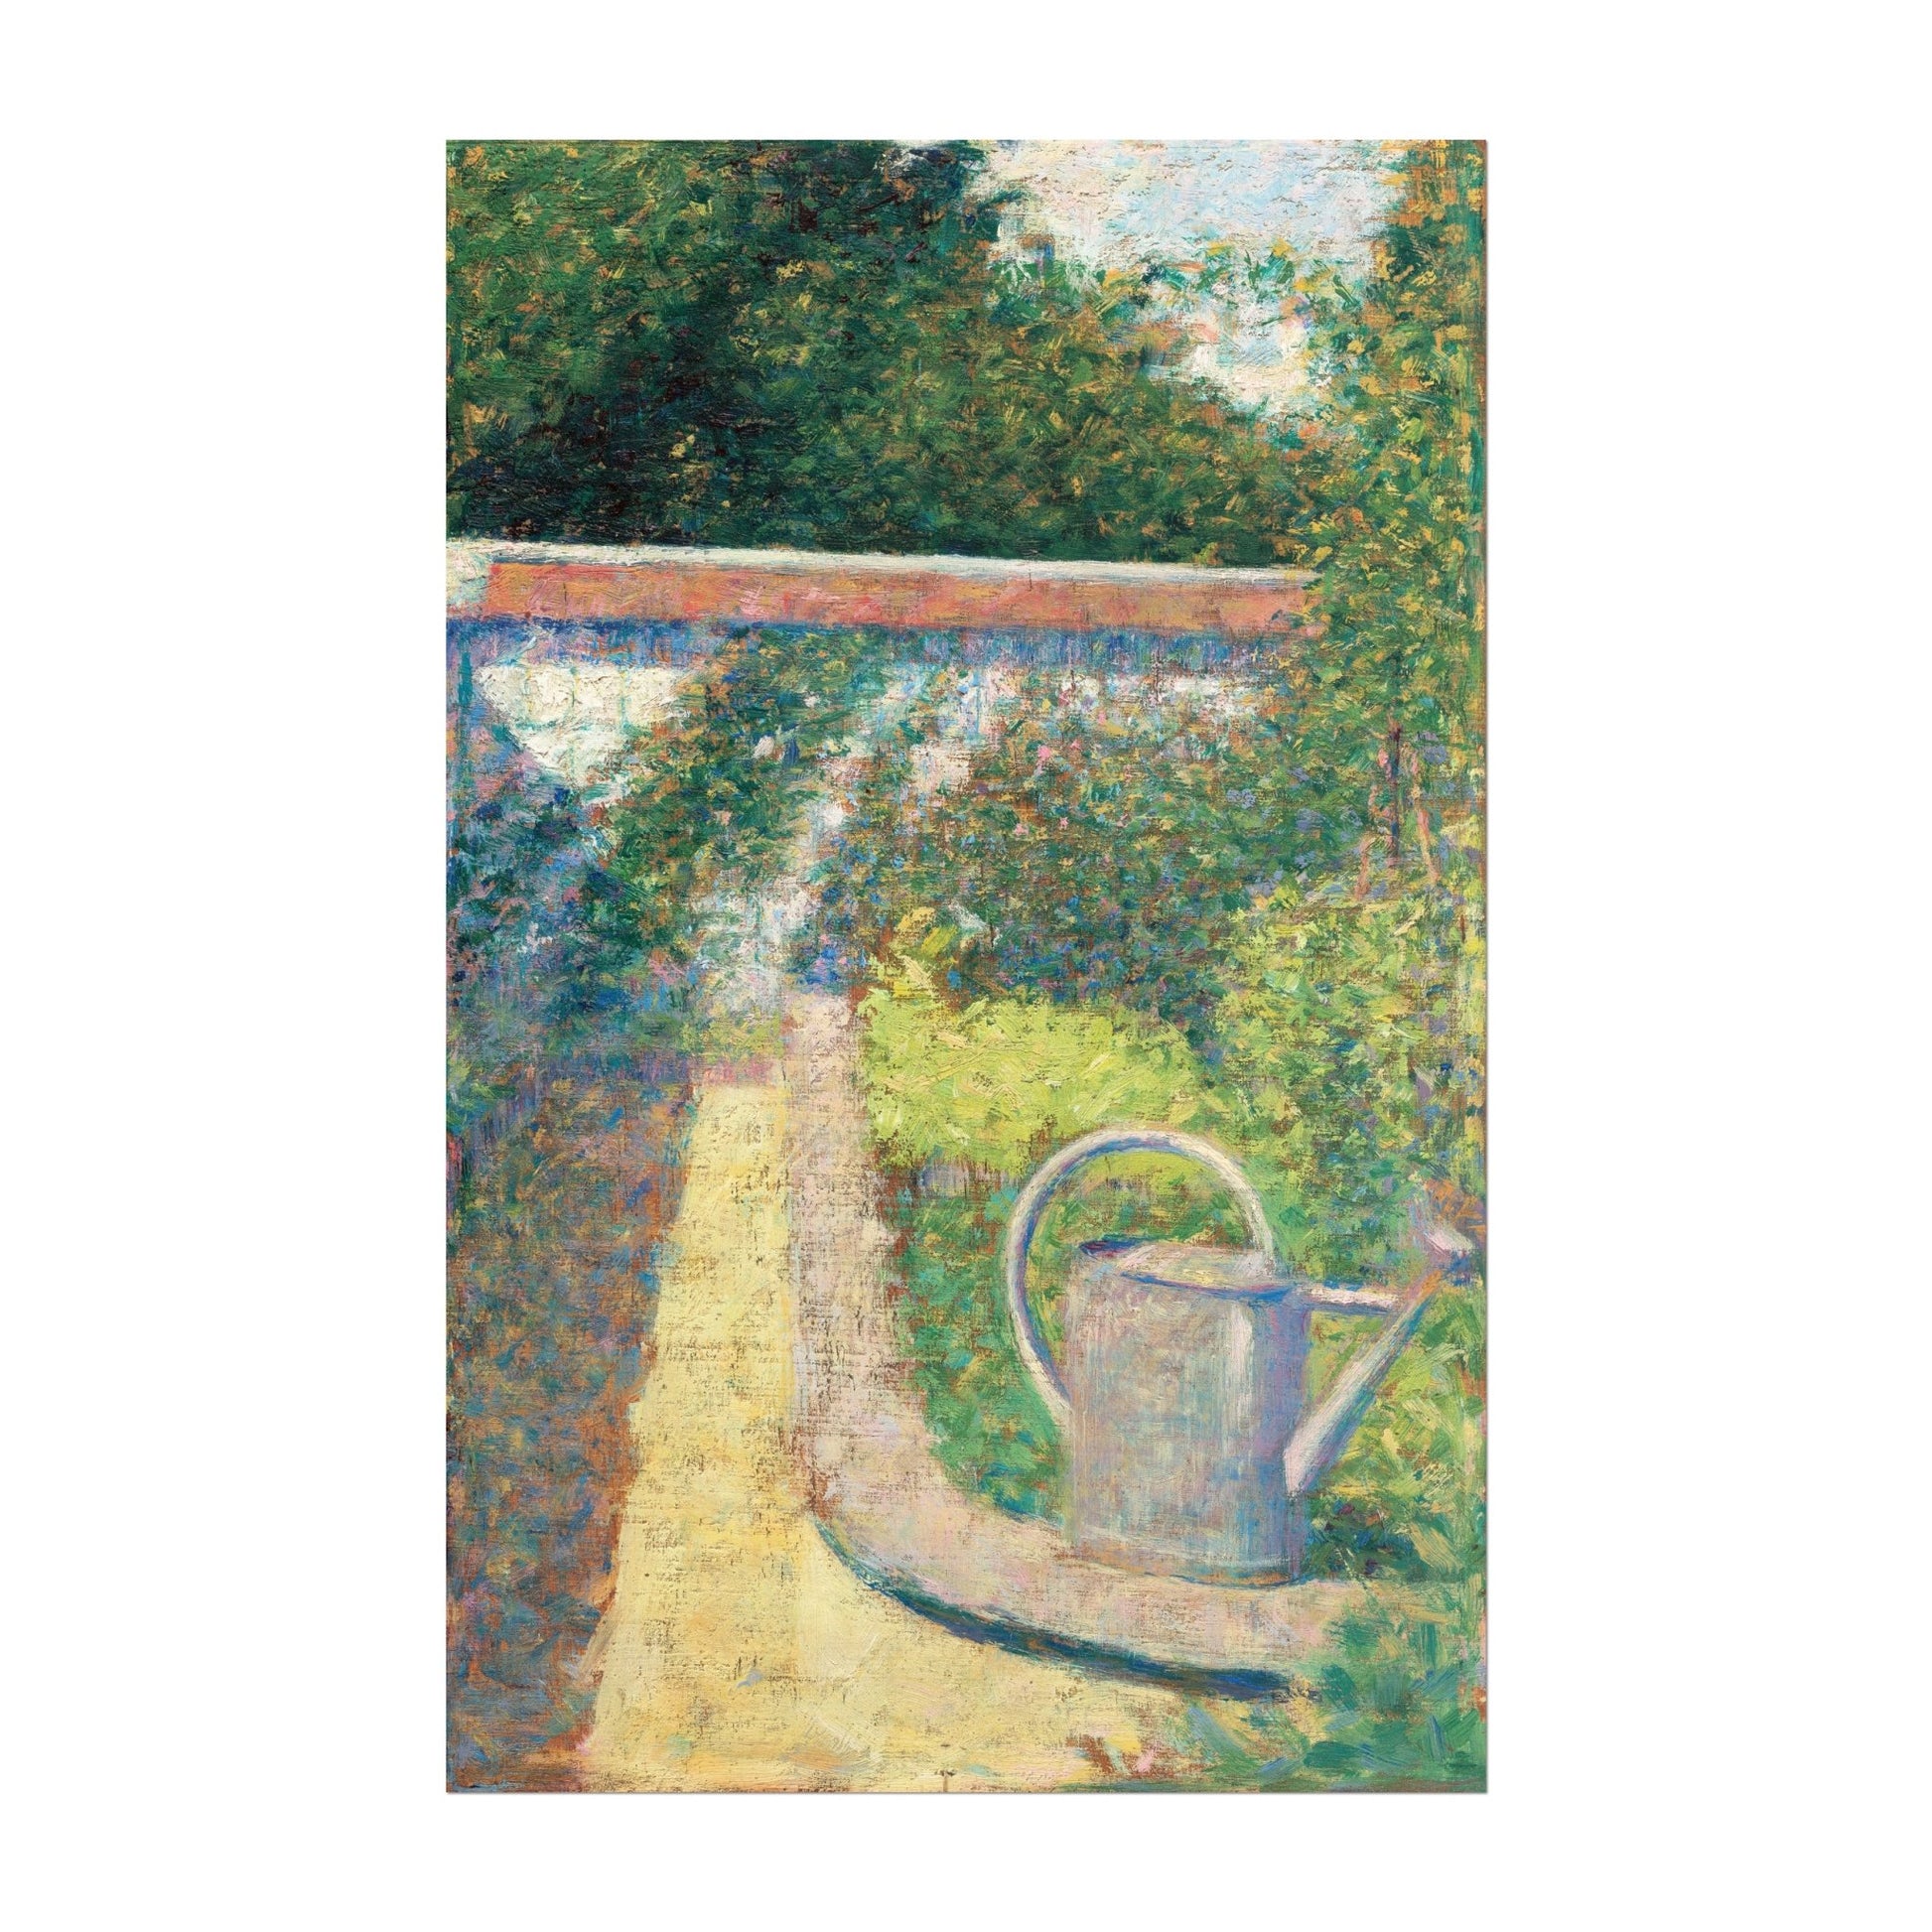 GEORGES SEURAT - The Watering Can (Garden at Le Raincy) - Pathos Studio -